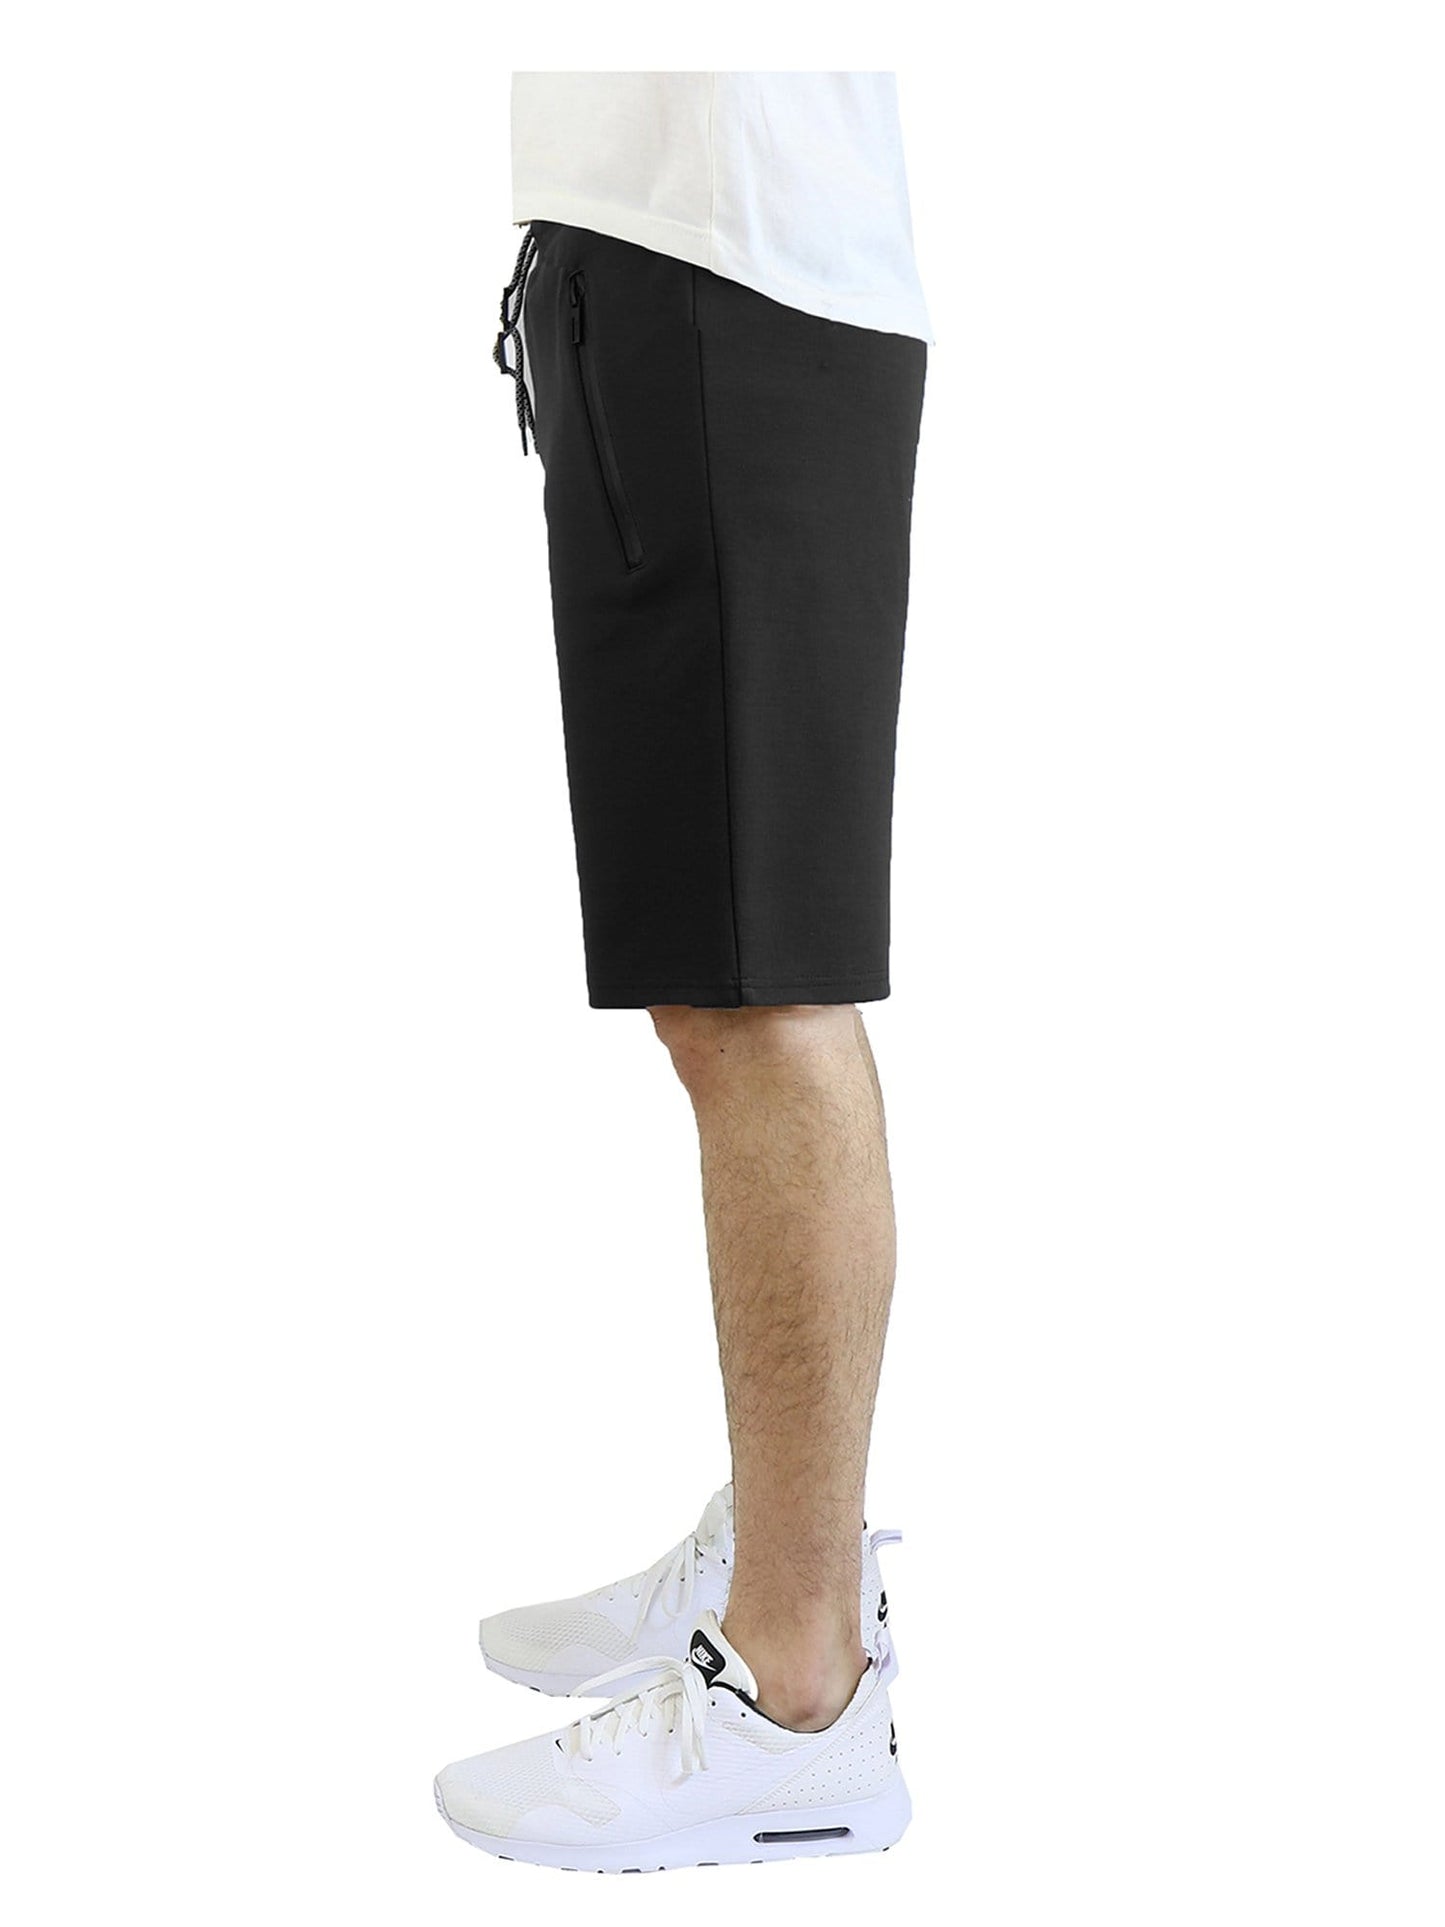 Men's Tech Fleece Shorts With Zipper Pockets - GalaxybyHarvic